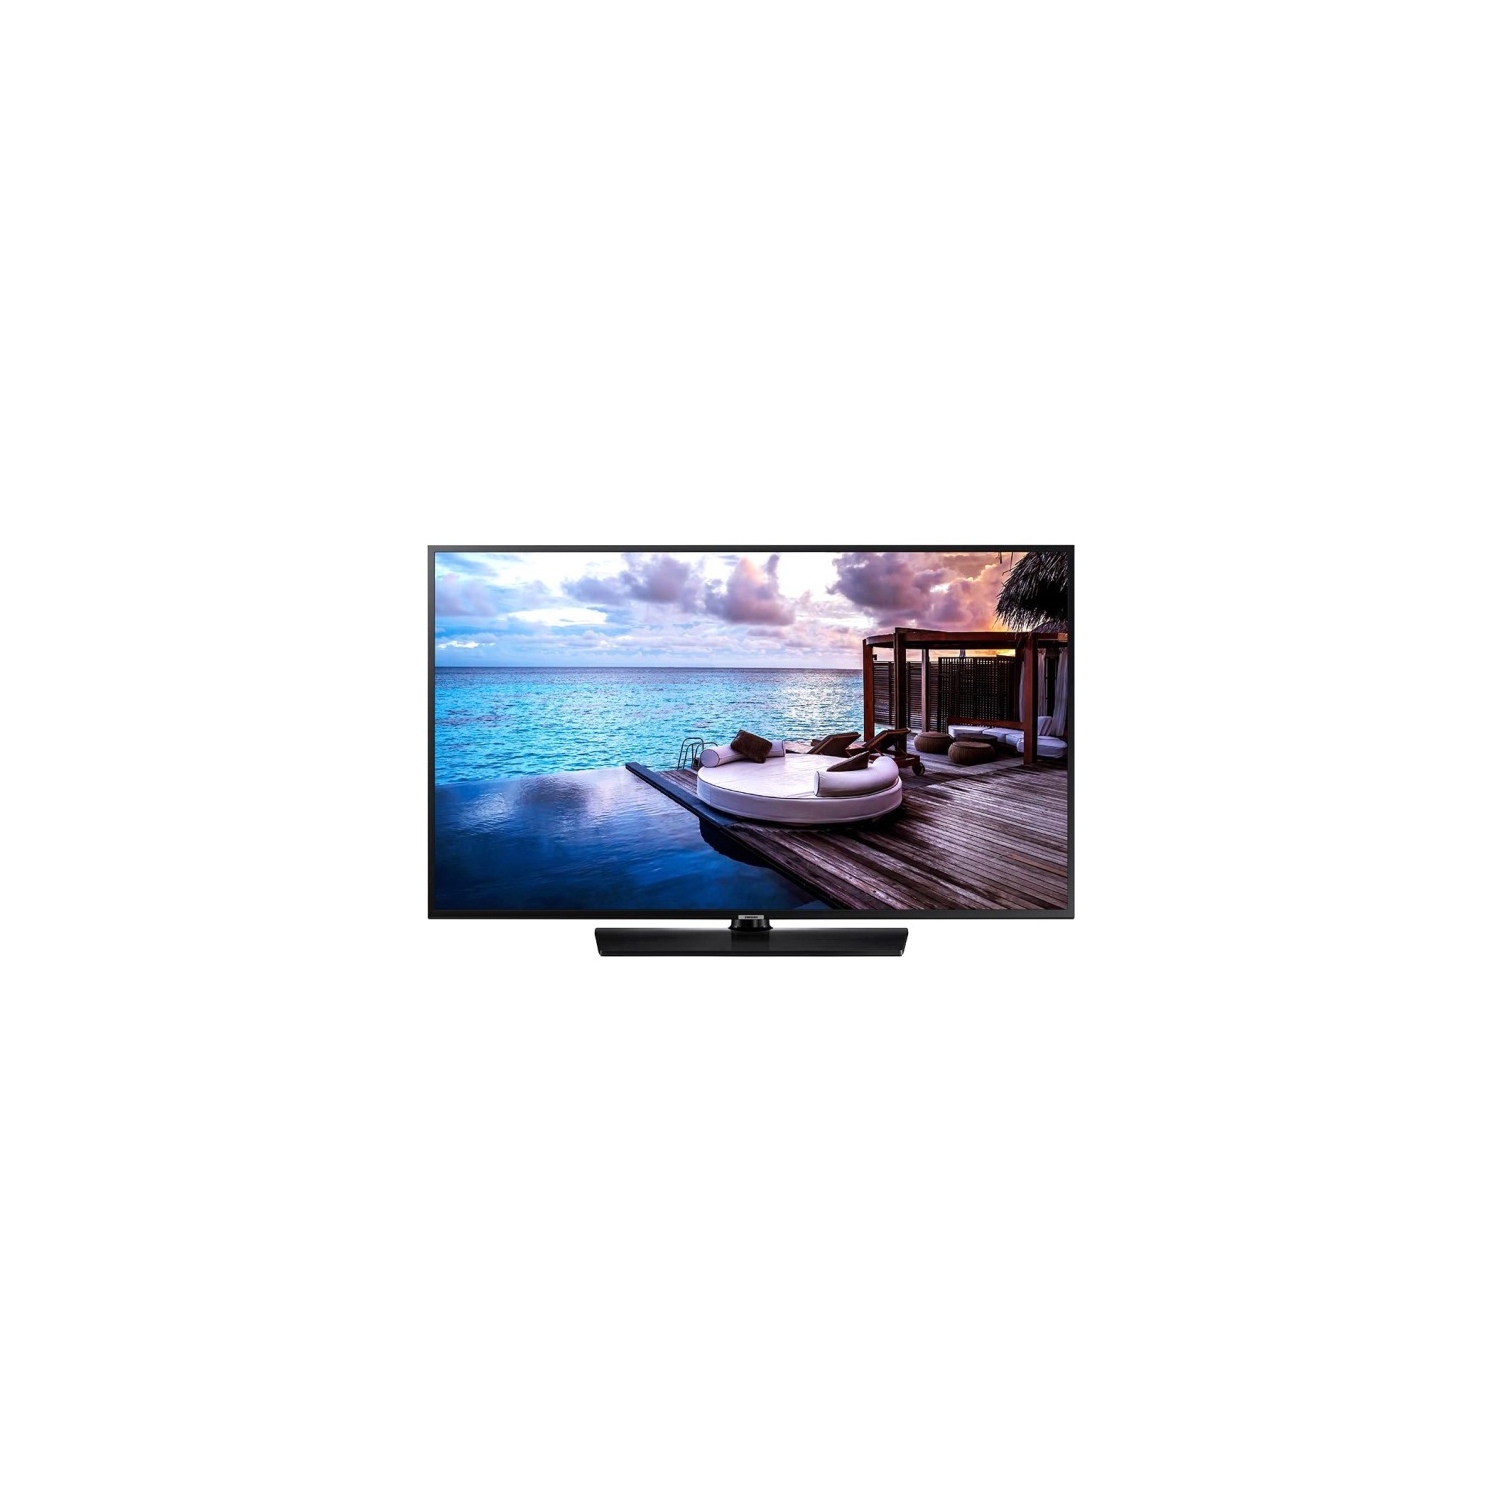 Samsung 670U 50" 4K UHD HDR LCD TV - Charcoal Black - (HG50NJ670UFXZA)